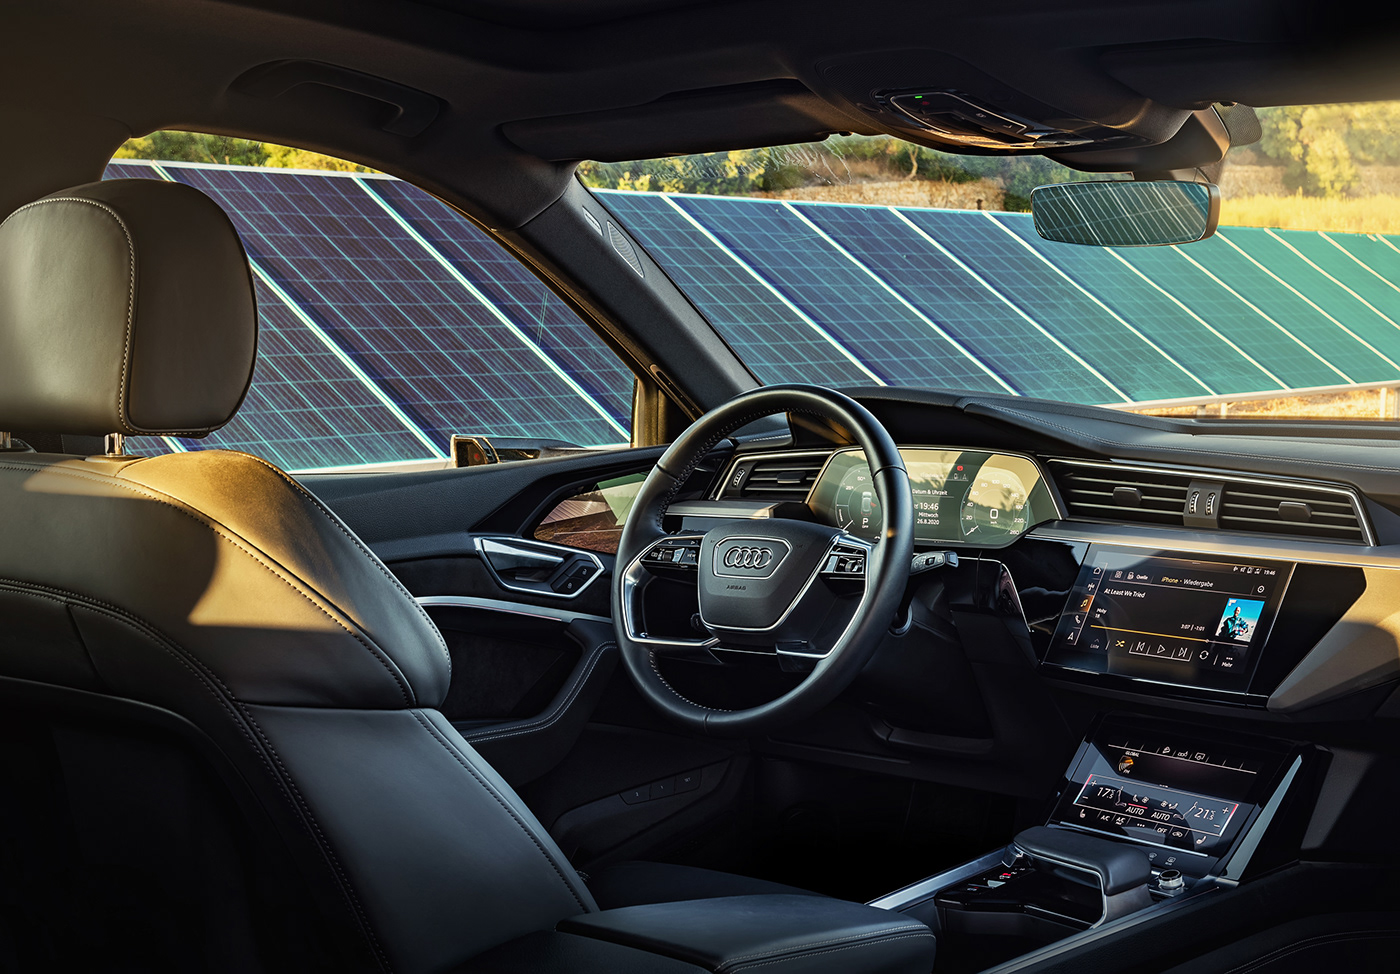 Audi e-tron interior shot by Dean Wright Photography in Solar Farm. More on deanwrightautomotive.com